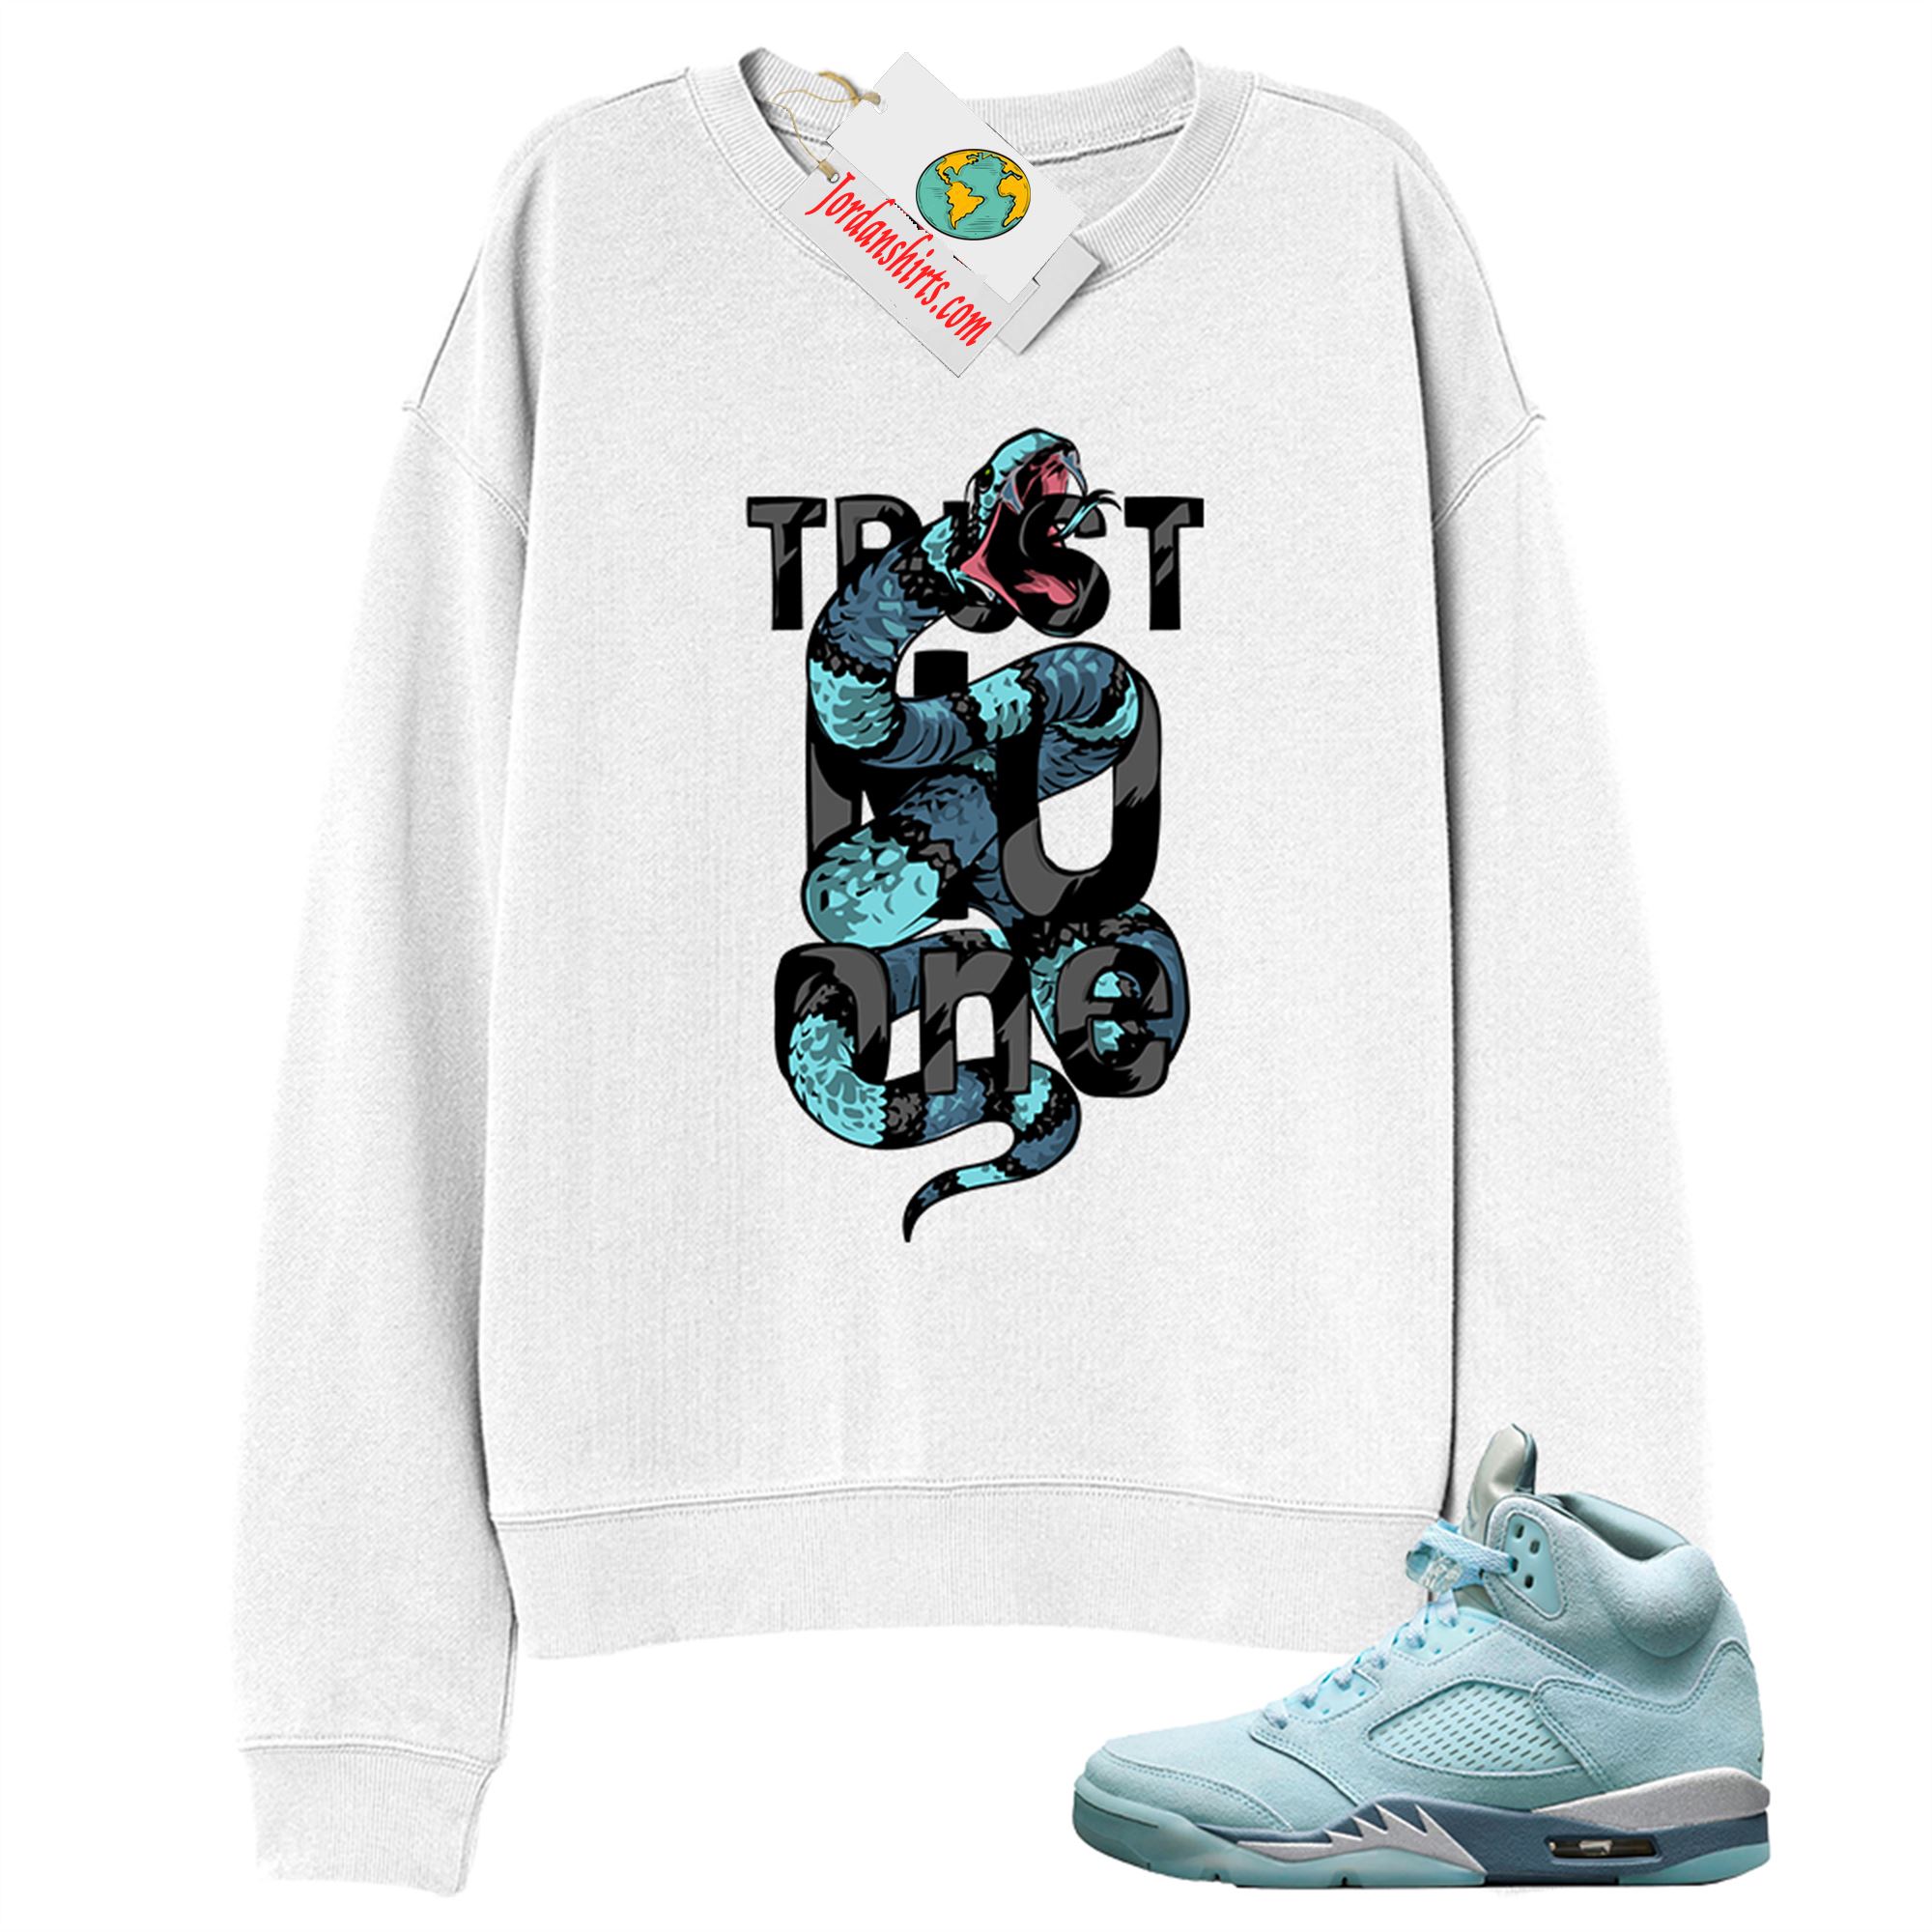 Jordan 5 Sweatshirt, Trust No One King Snake White Sweatshirt Air Jordan 5 Bluebird 5s Plus Size Up To 5xl